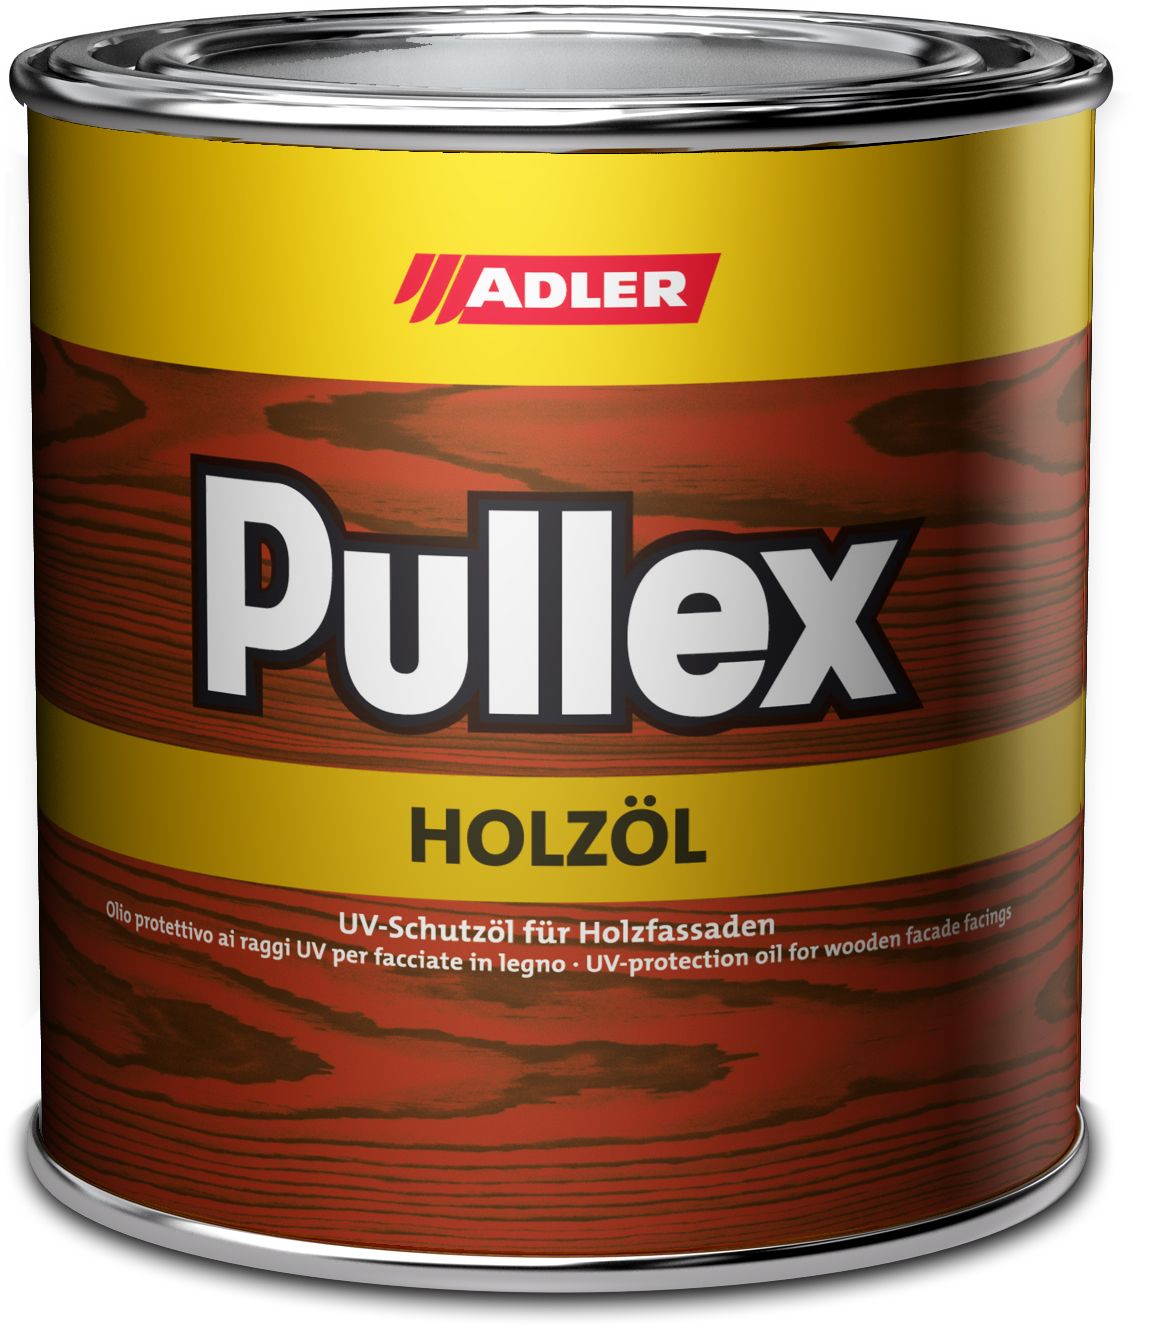 Adler Pullex Holzöl Dose illustriert